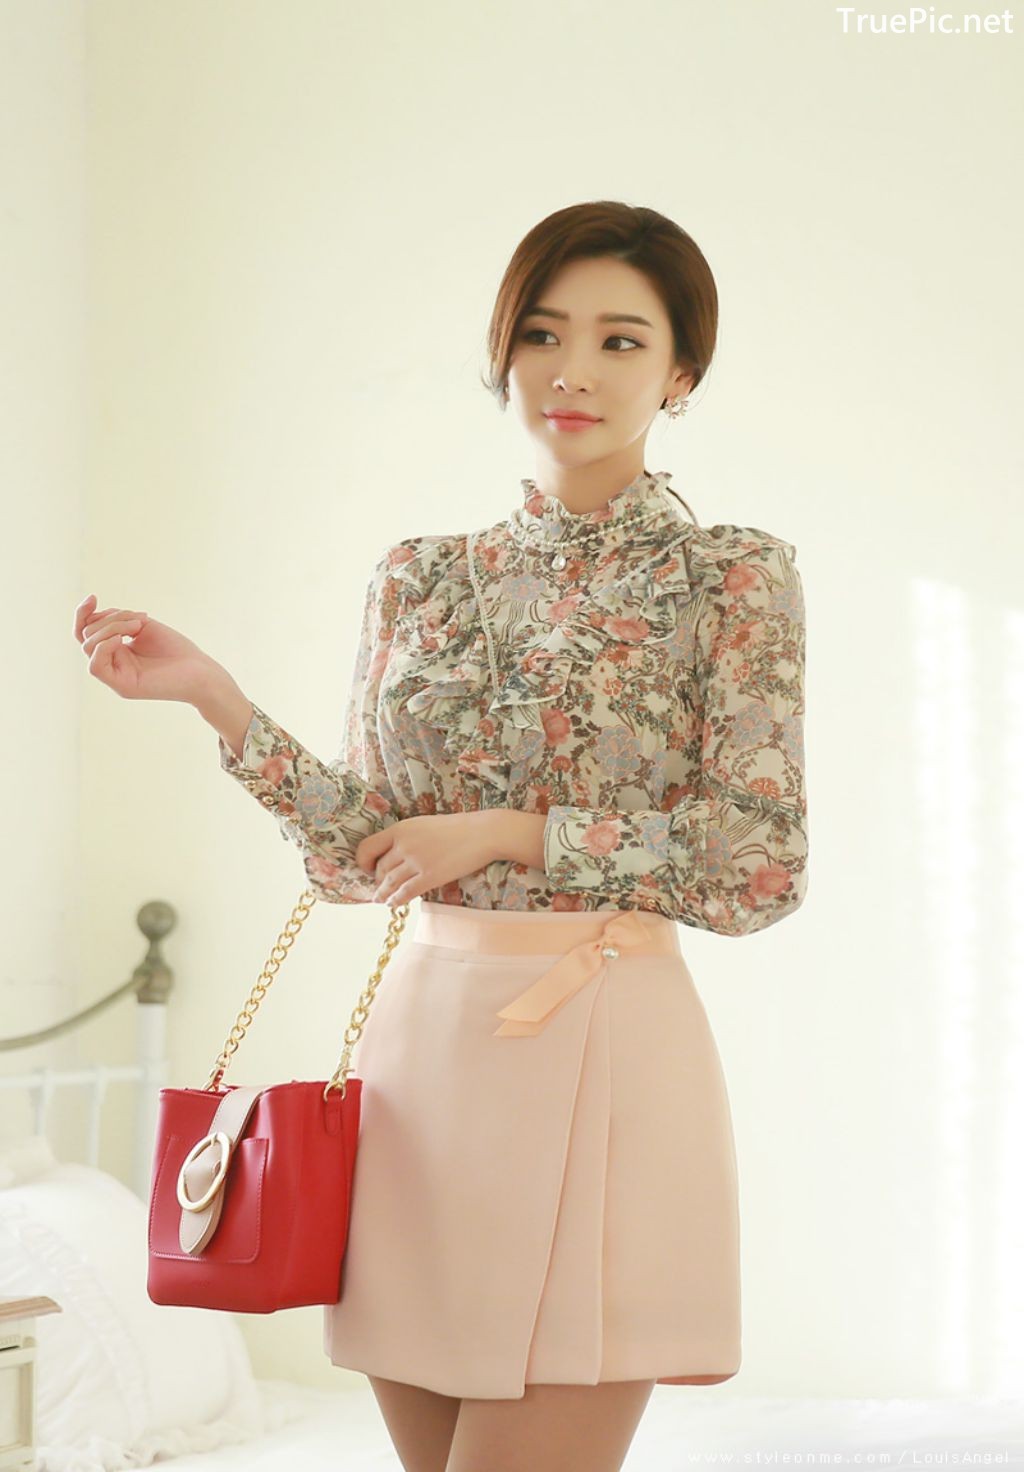 Image-Korean-Fashion-Model-Park-Da-Hyun-Office-Dress-Collection-TruePic.net- Picture-22